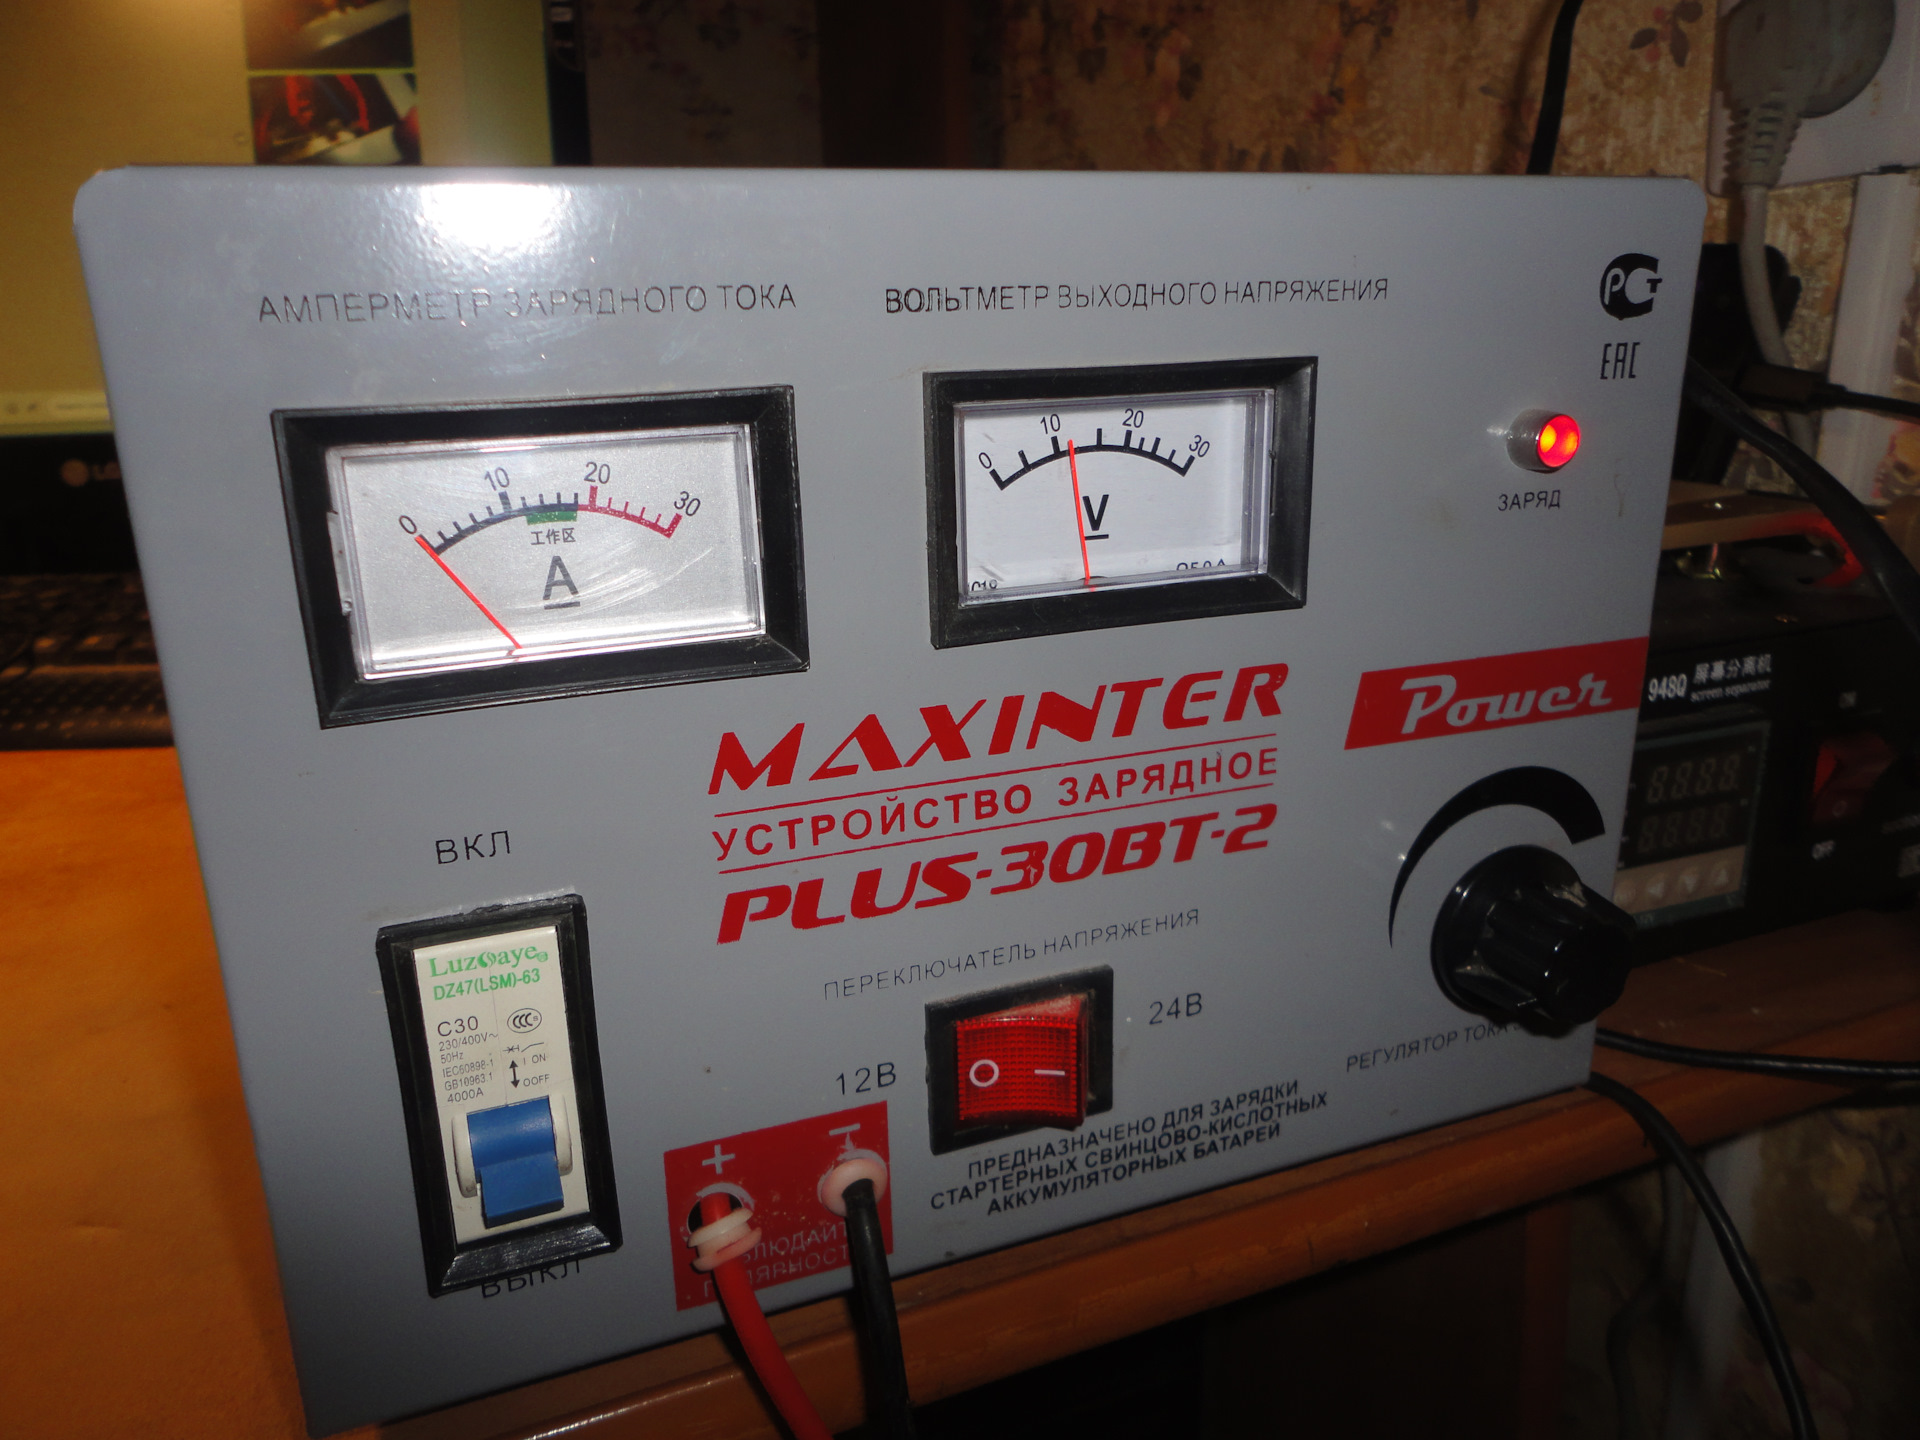 Максинтер зарядное. Зарядное Maxinter Plus - 30. Maxinter Plus 30вт-2. Зарядное устройство Maxinter Plus-30 BT-2. Зарядное устройство Maxinter Plus-30вт-2.